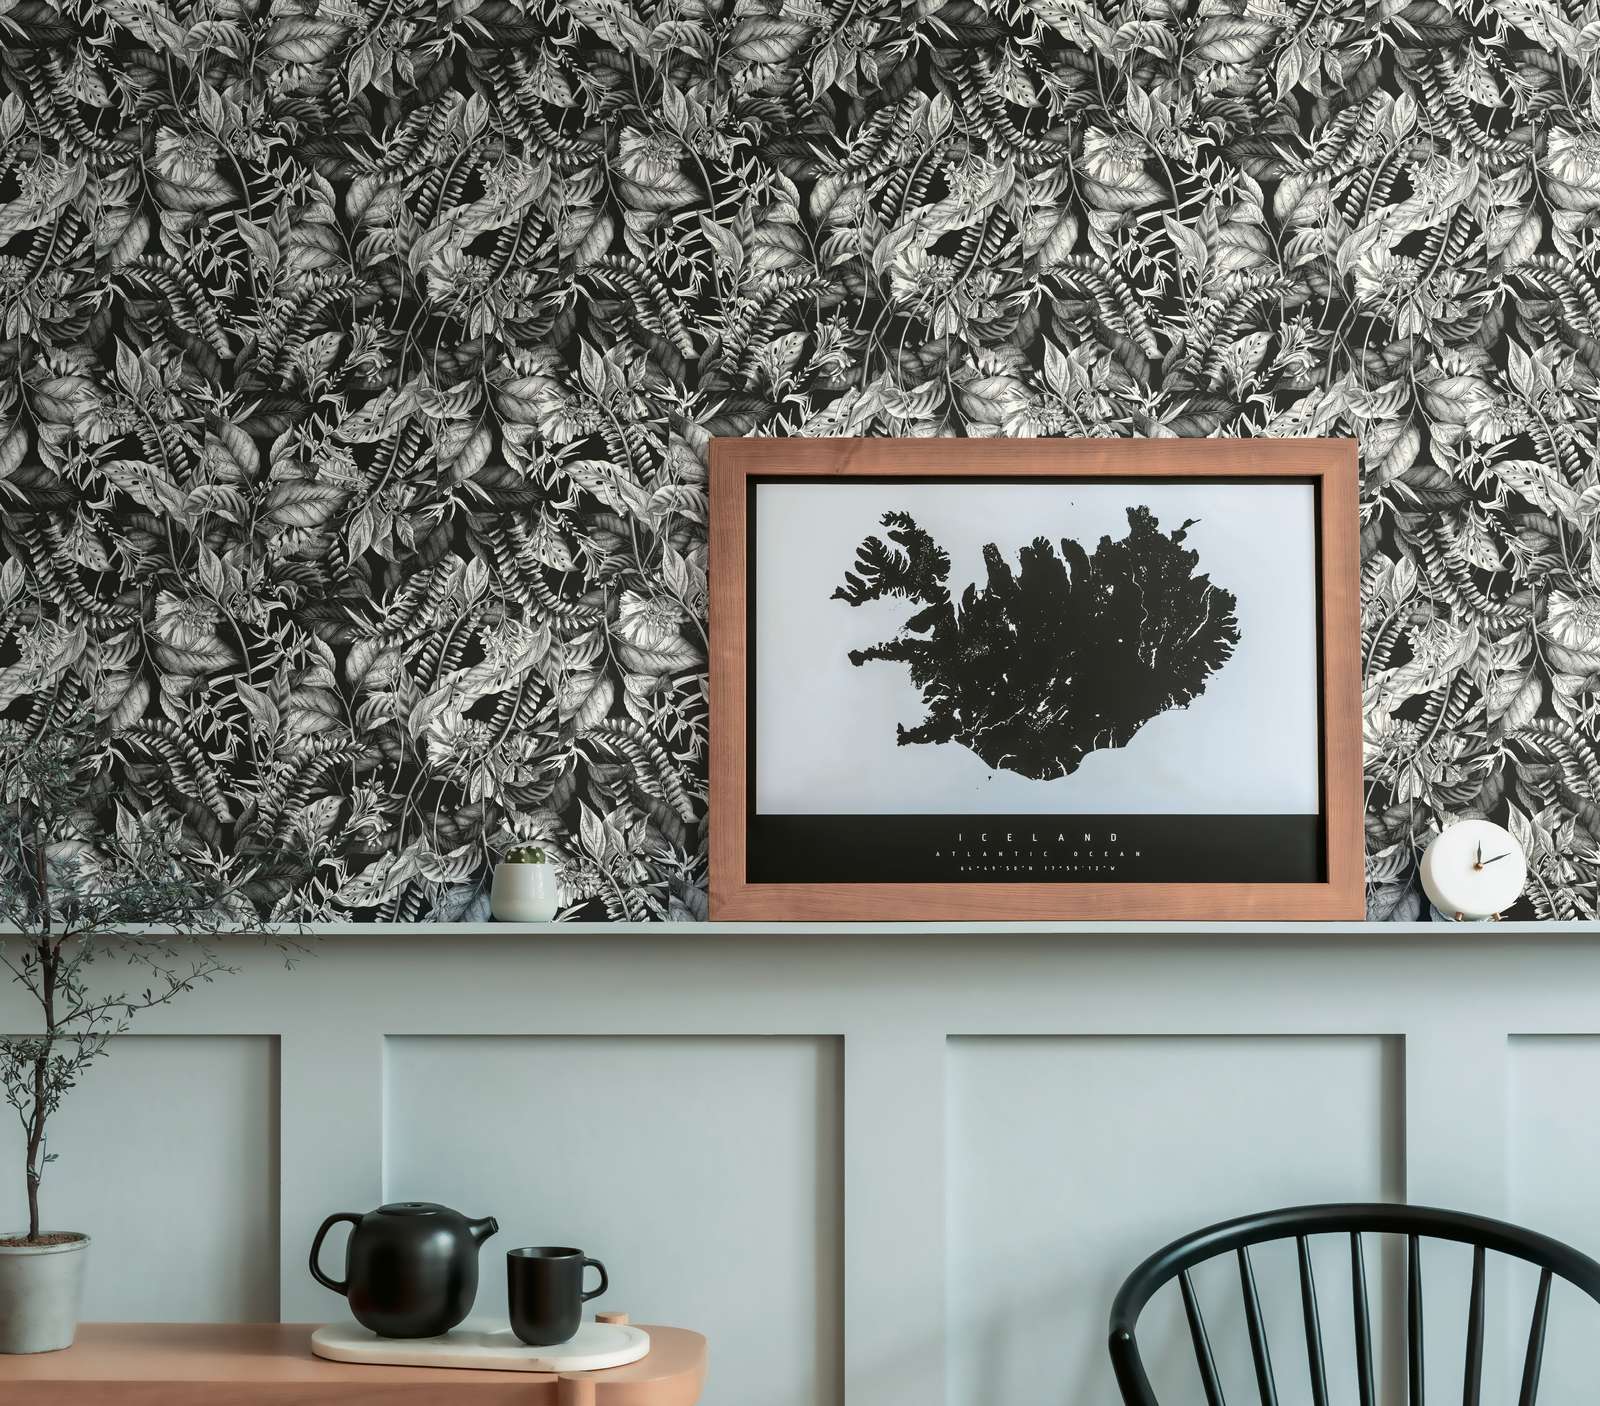             wallpaper floral with leaves & flowers textured matt - black, white
        